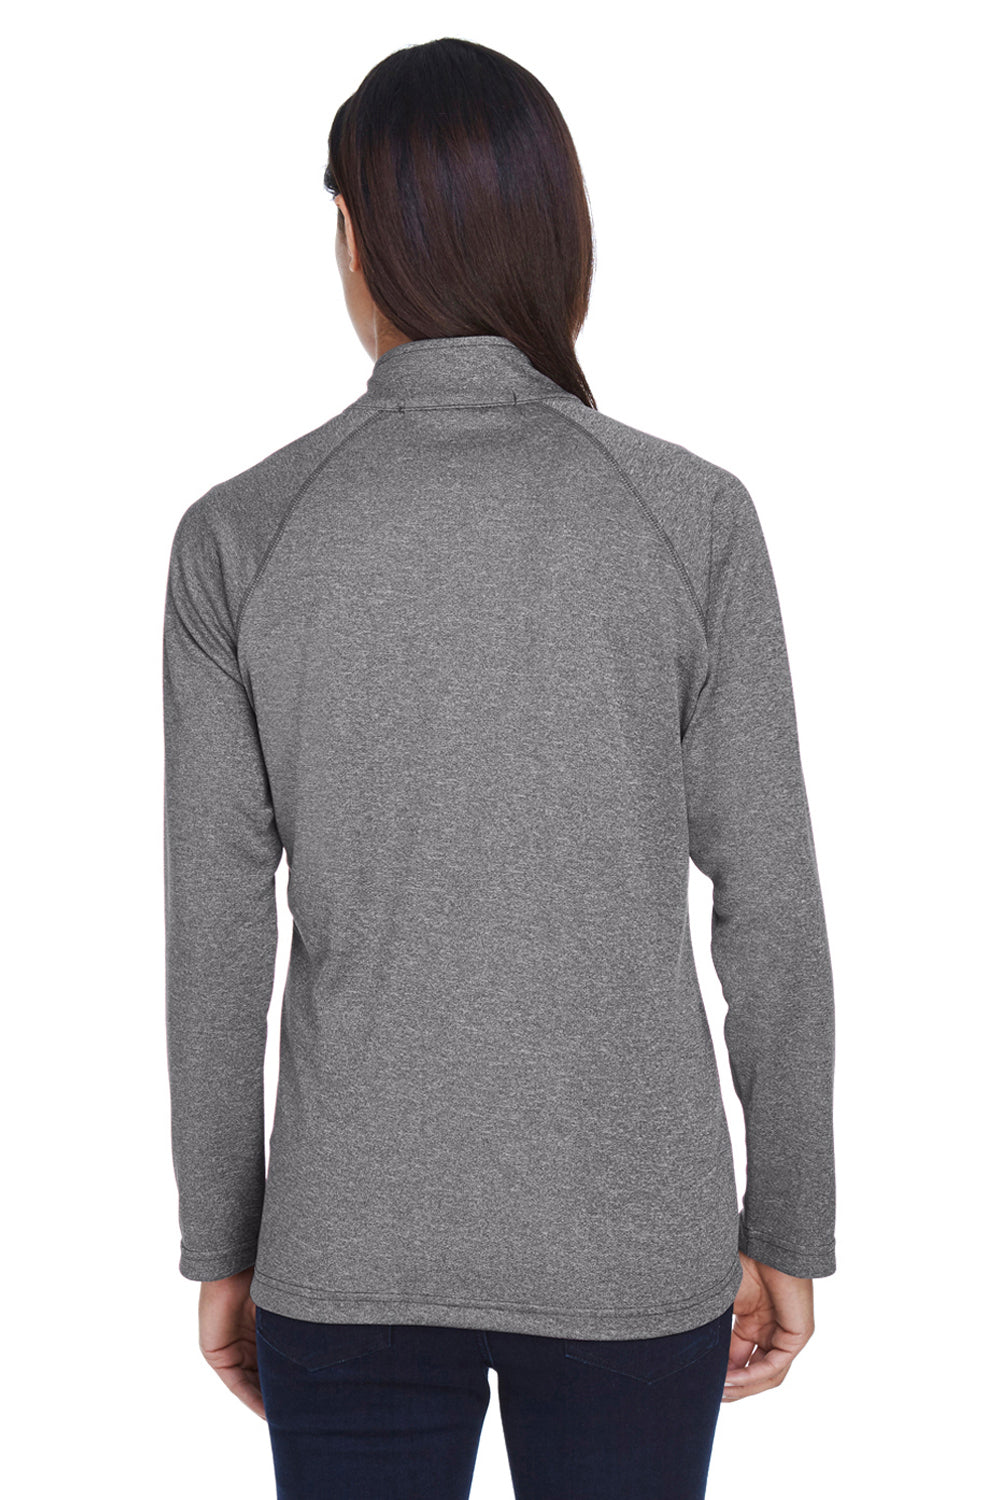 Devon & Jones DG420W Womens Compass Stretch Tech Moisture Wicking Full Zip Sweatshirt Dark Grey Back